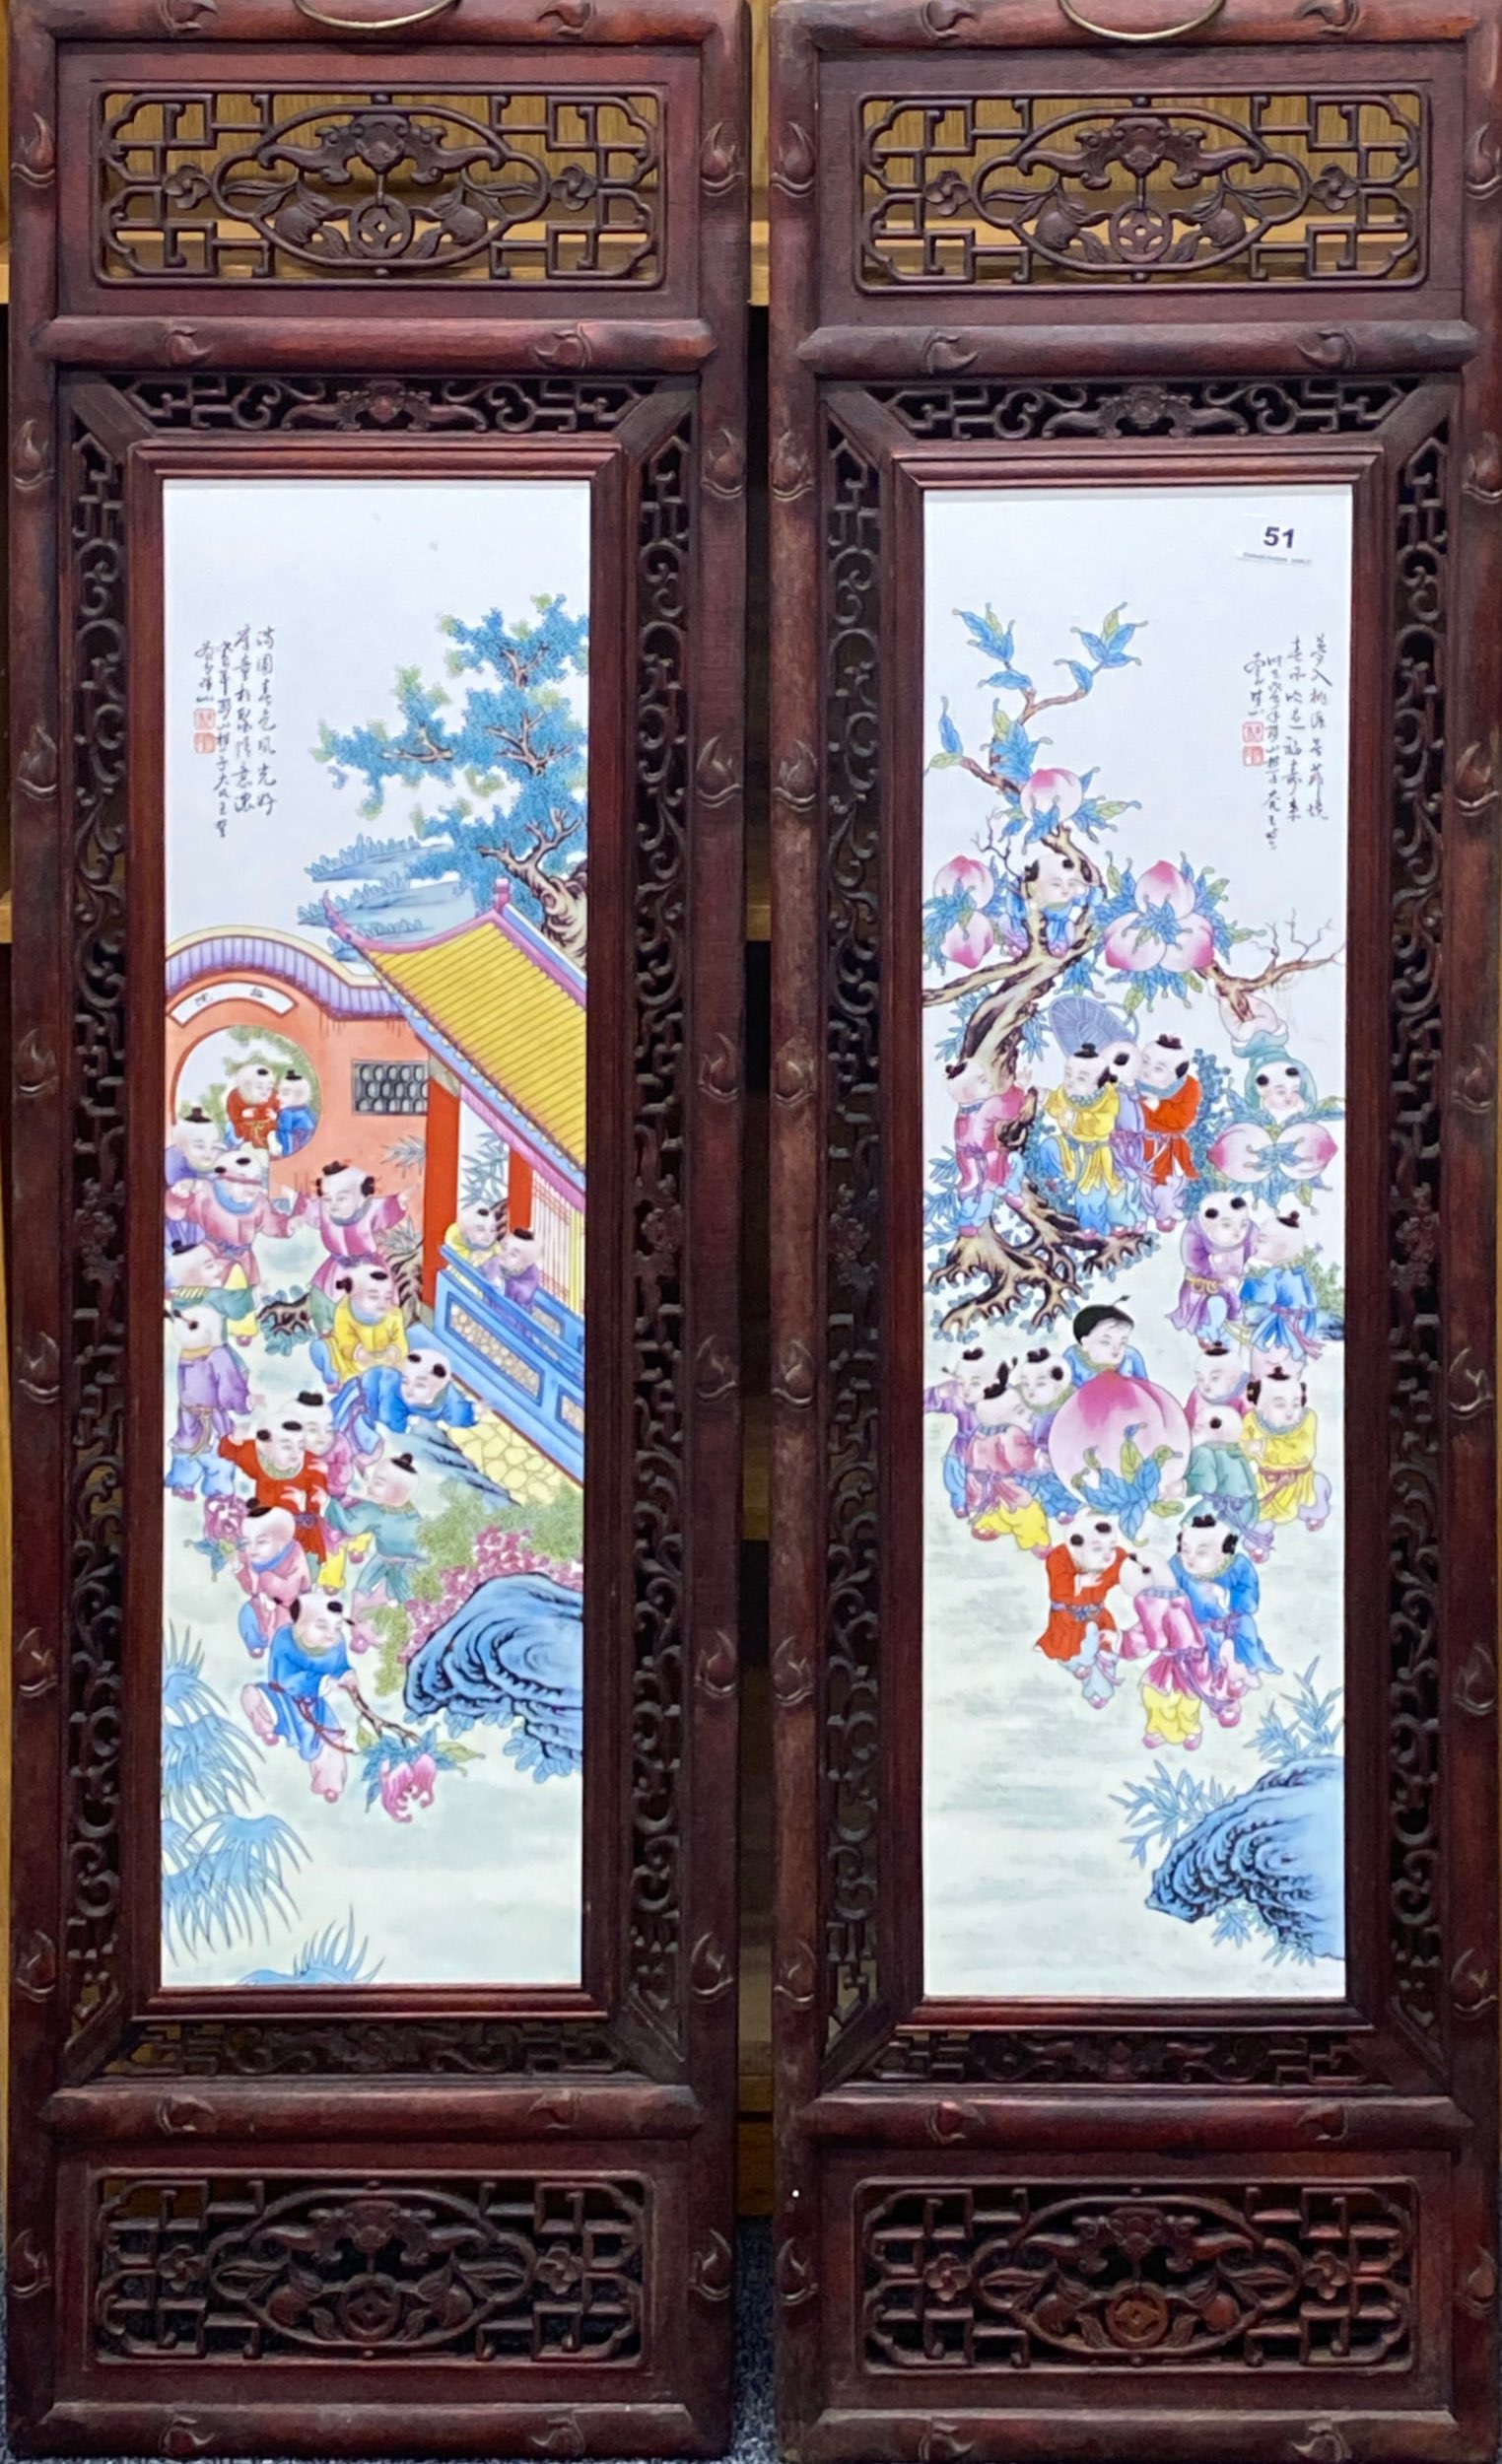 Two Chinese framed porcelain panels, frame size 120 x 36cm.